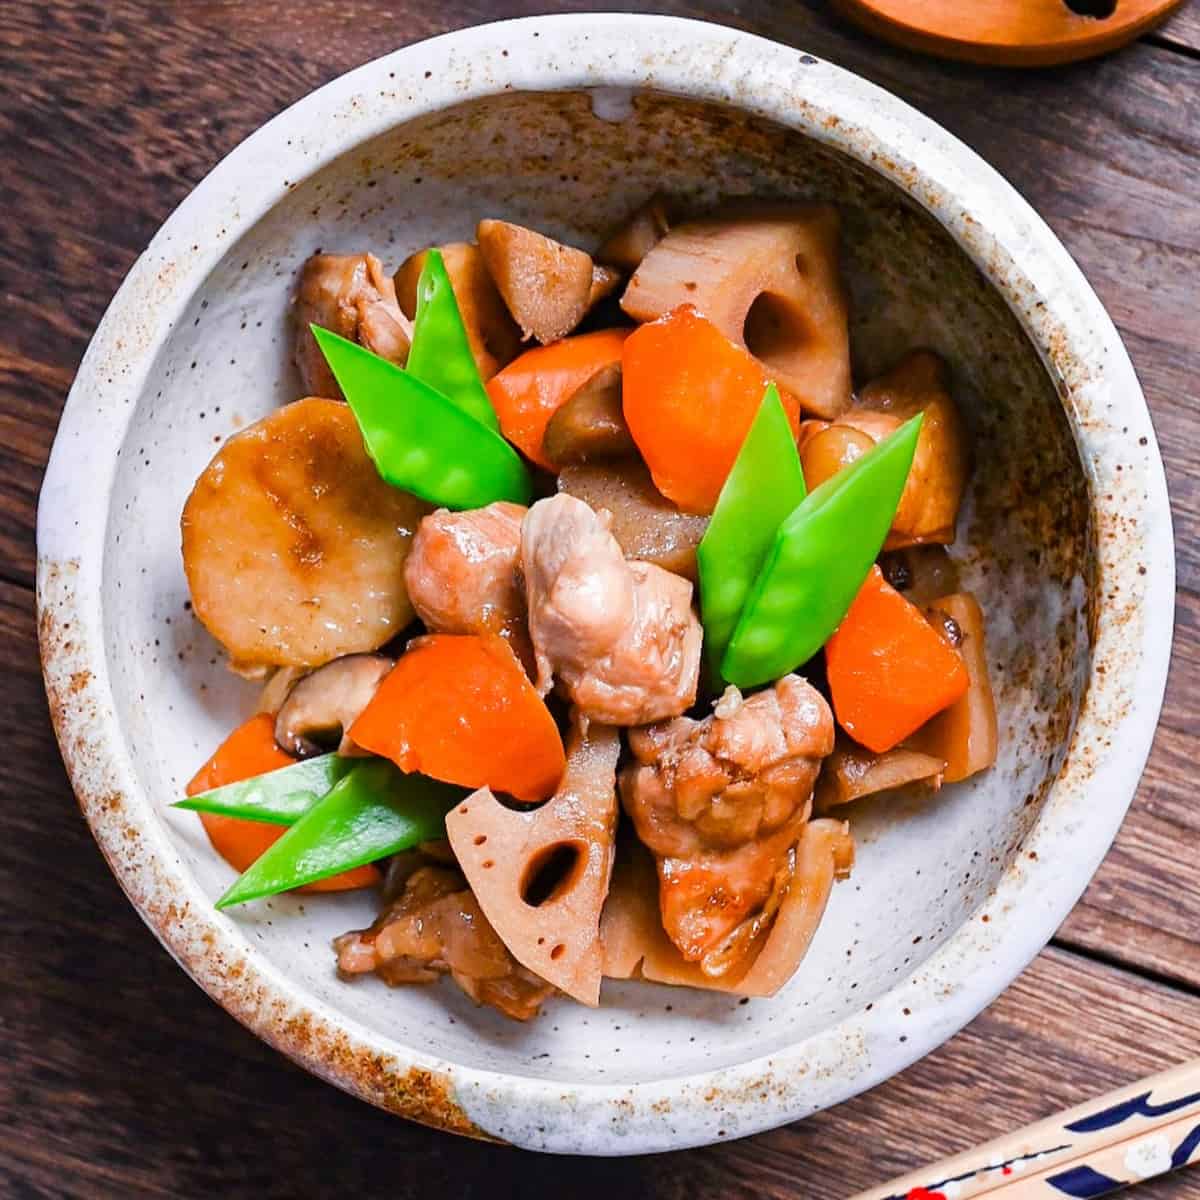 Chikuzenni (Japanese simmered chicken and vegetables) served in a mottled beige bowl